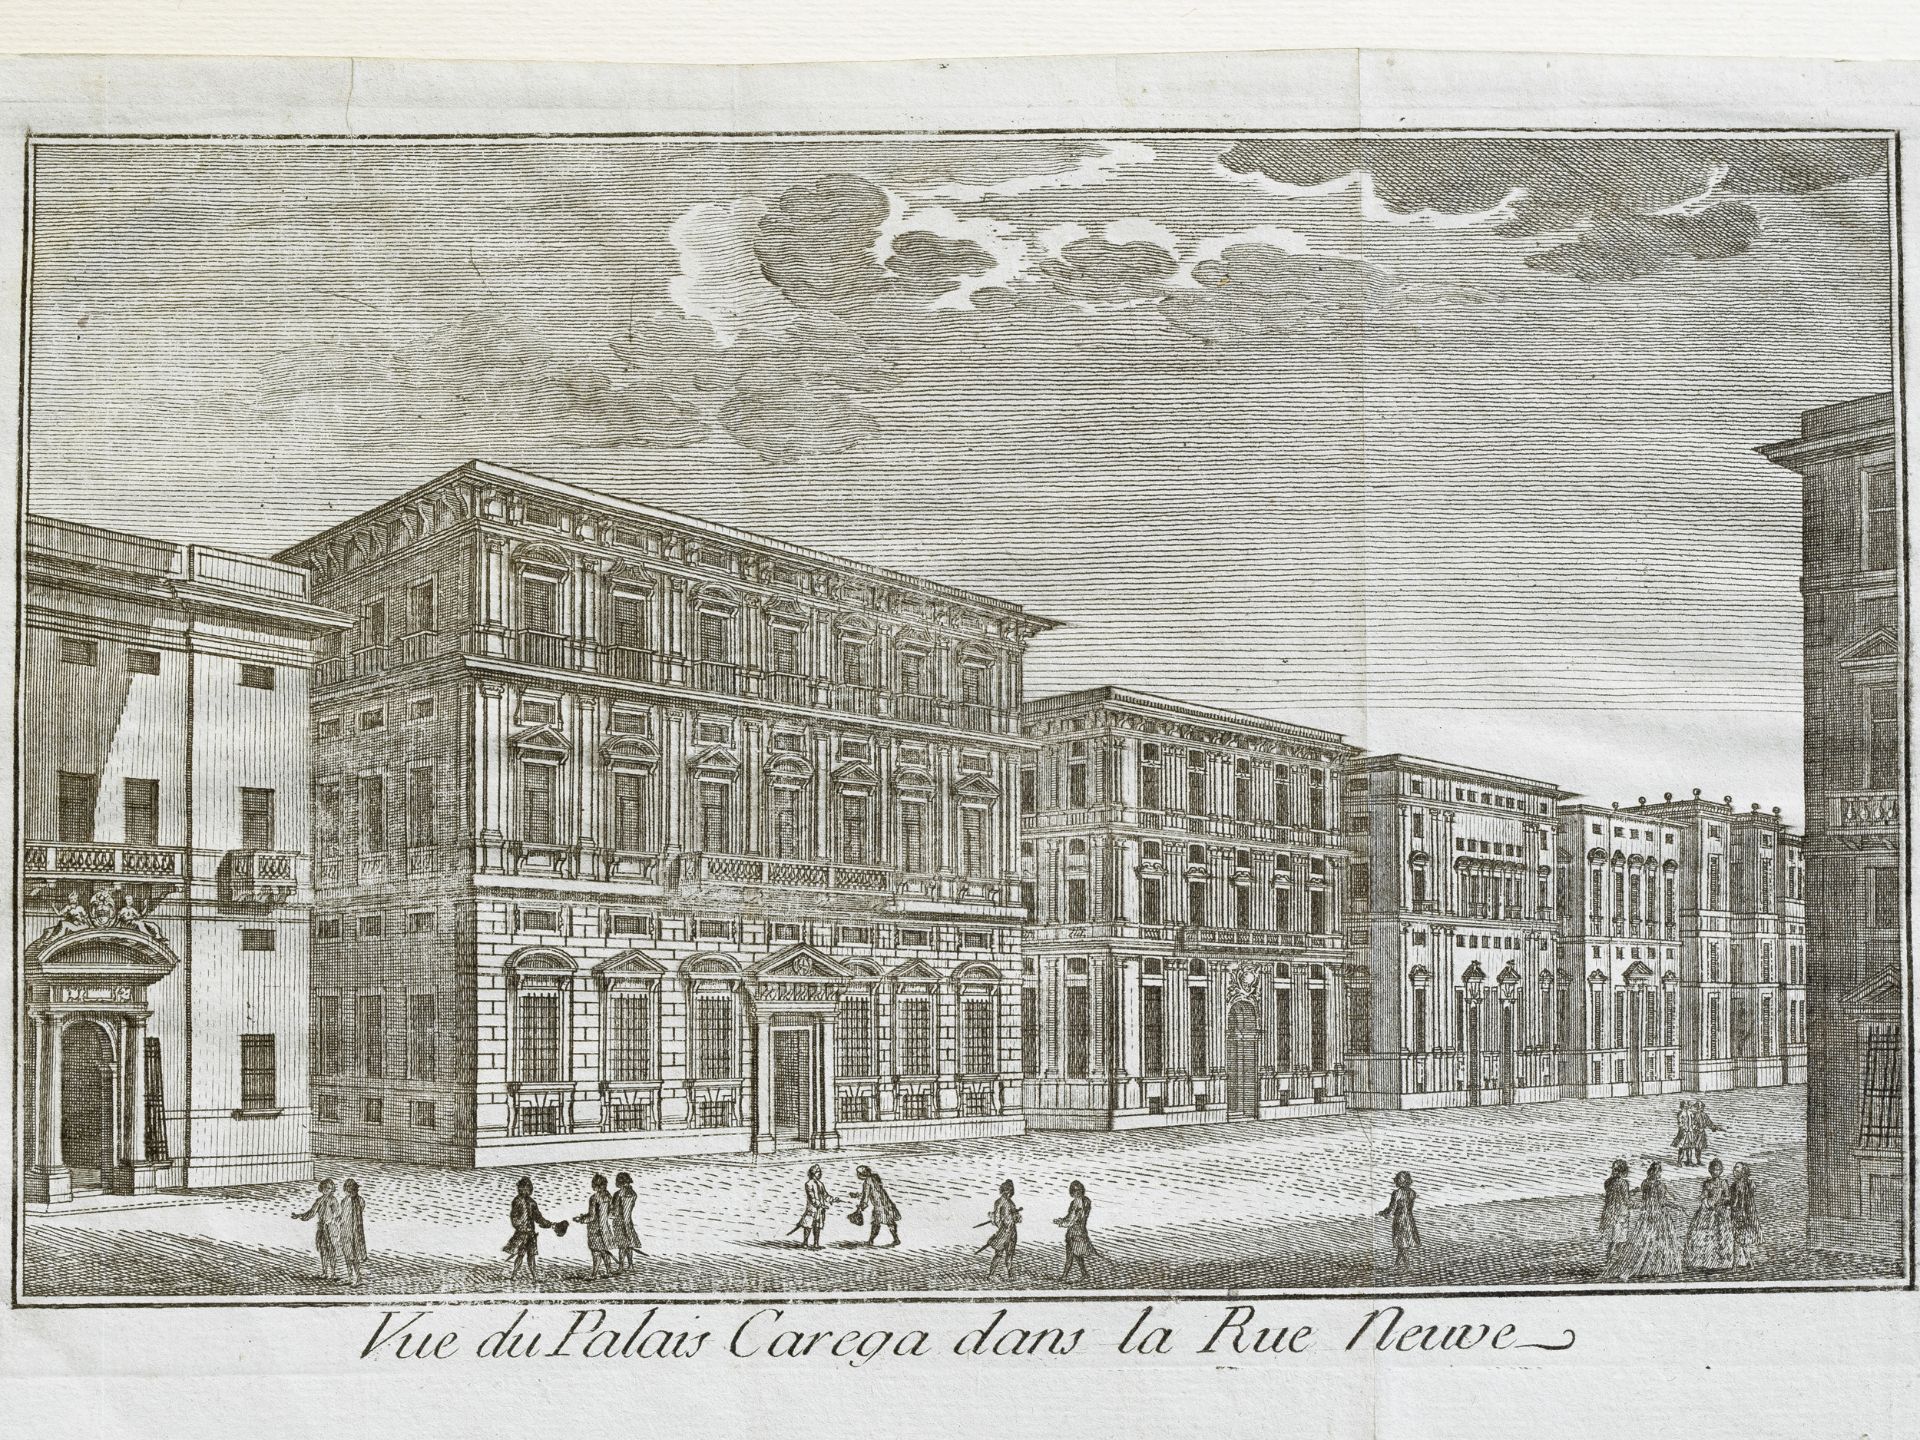 "Vue du Palais Carega dans la Rue Neuve", Genova, 1781 (first edition)